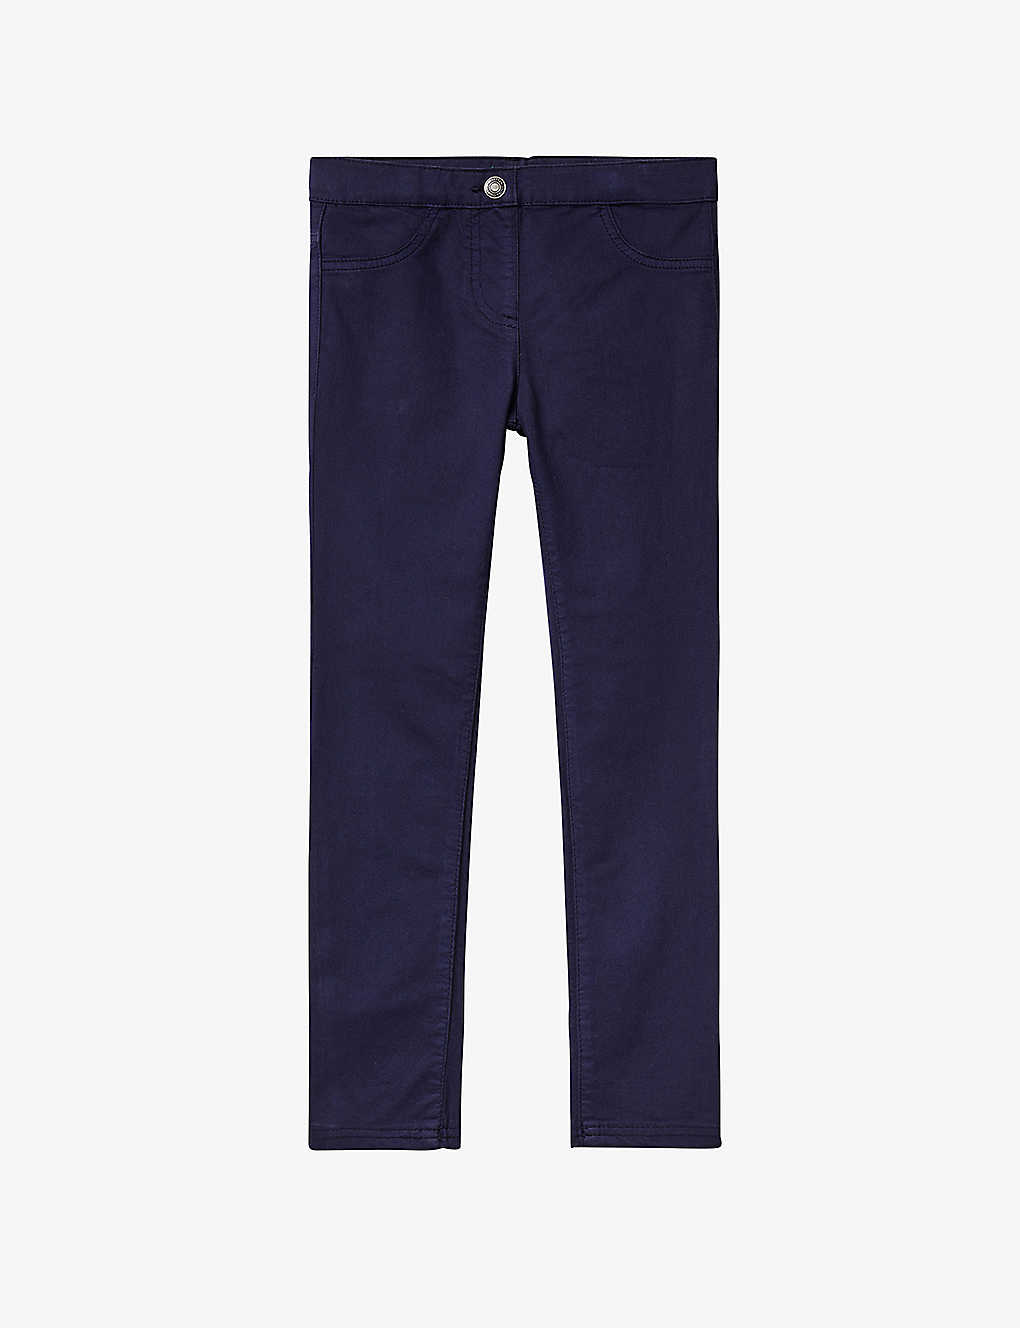 Benetton Boys Navy Blue Kids Slim-leg Stretch Cotton-blend Trousers 6-14 Years